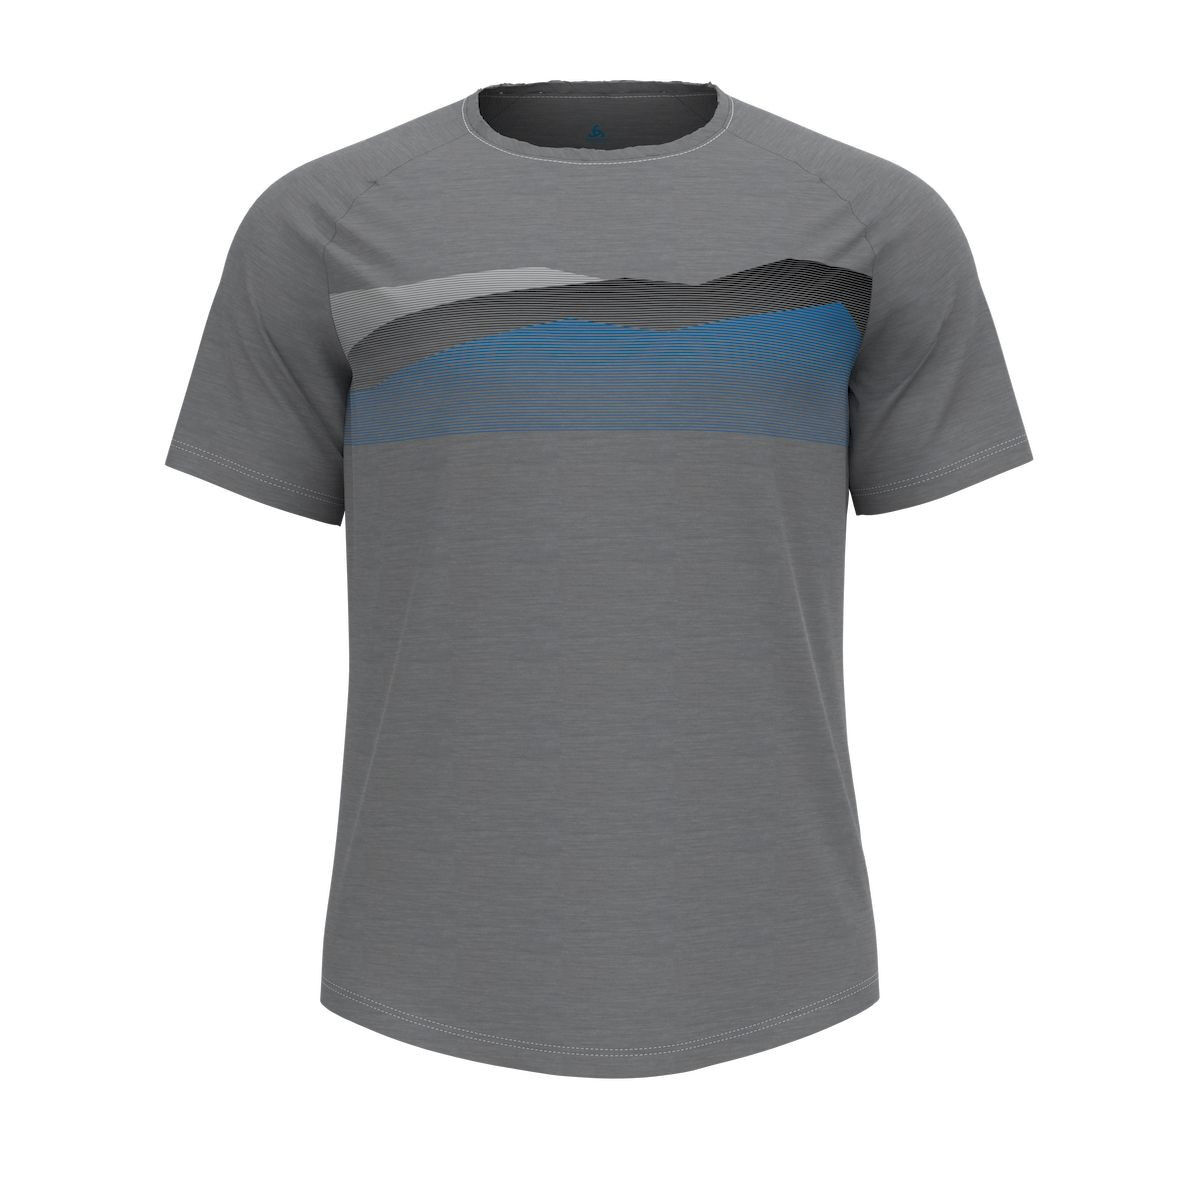 Odlo Concord Seasonal Print - T-shirt - Men's